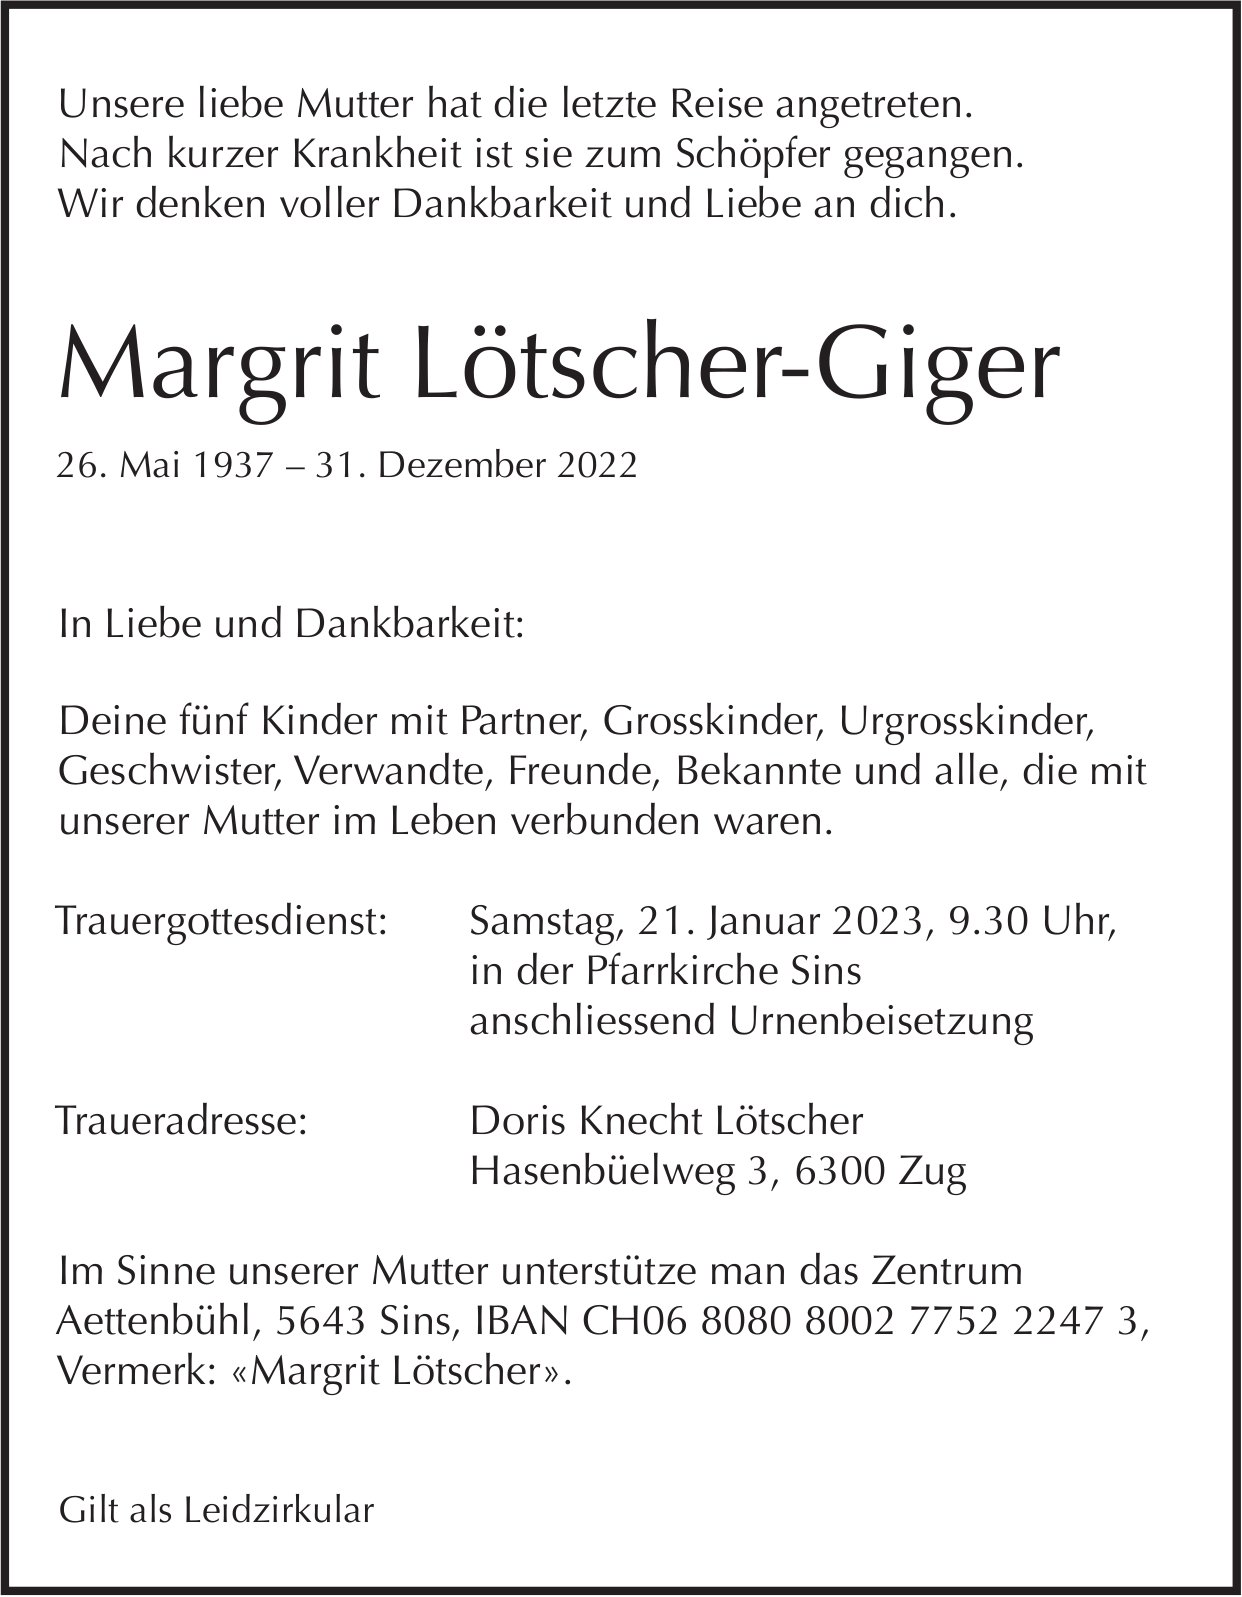 Lötscher-Giger Margrit, Dezember 2022 / TA